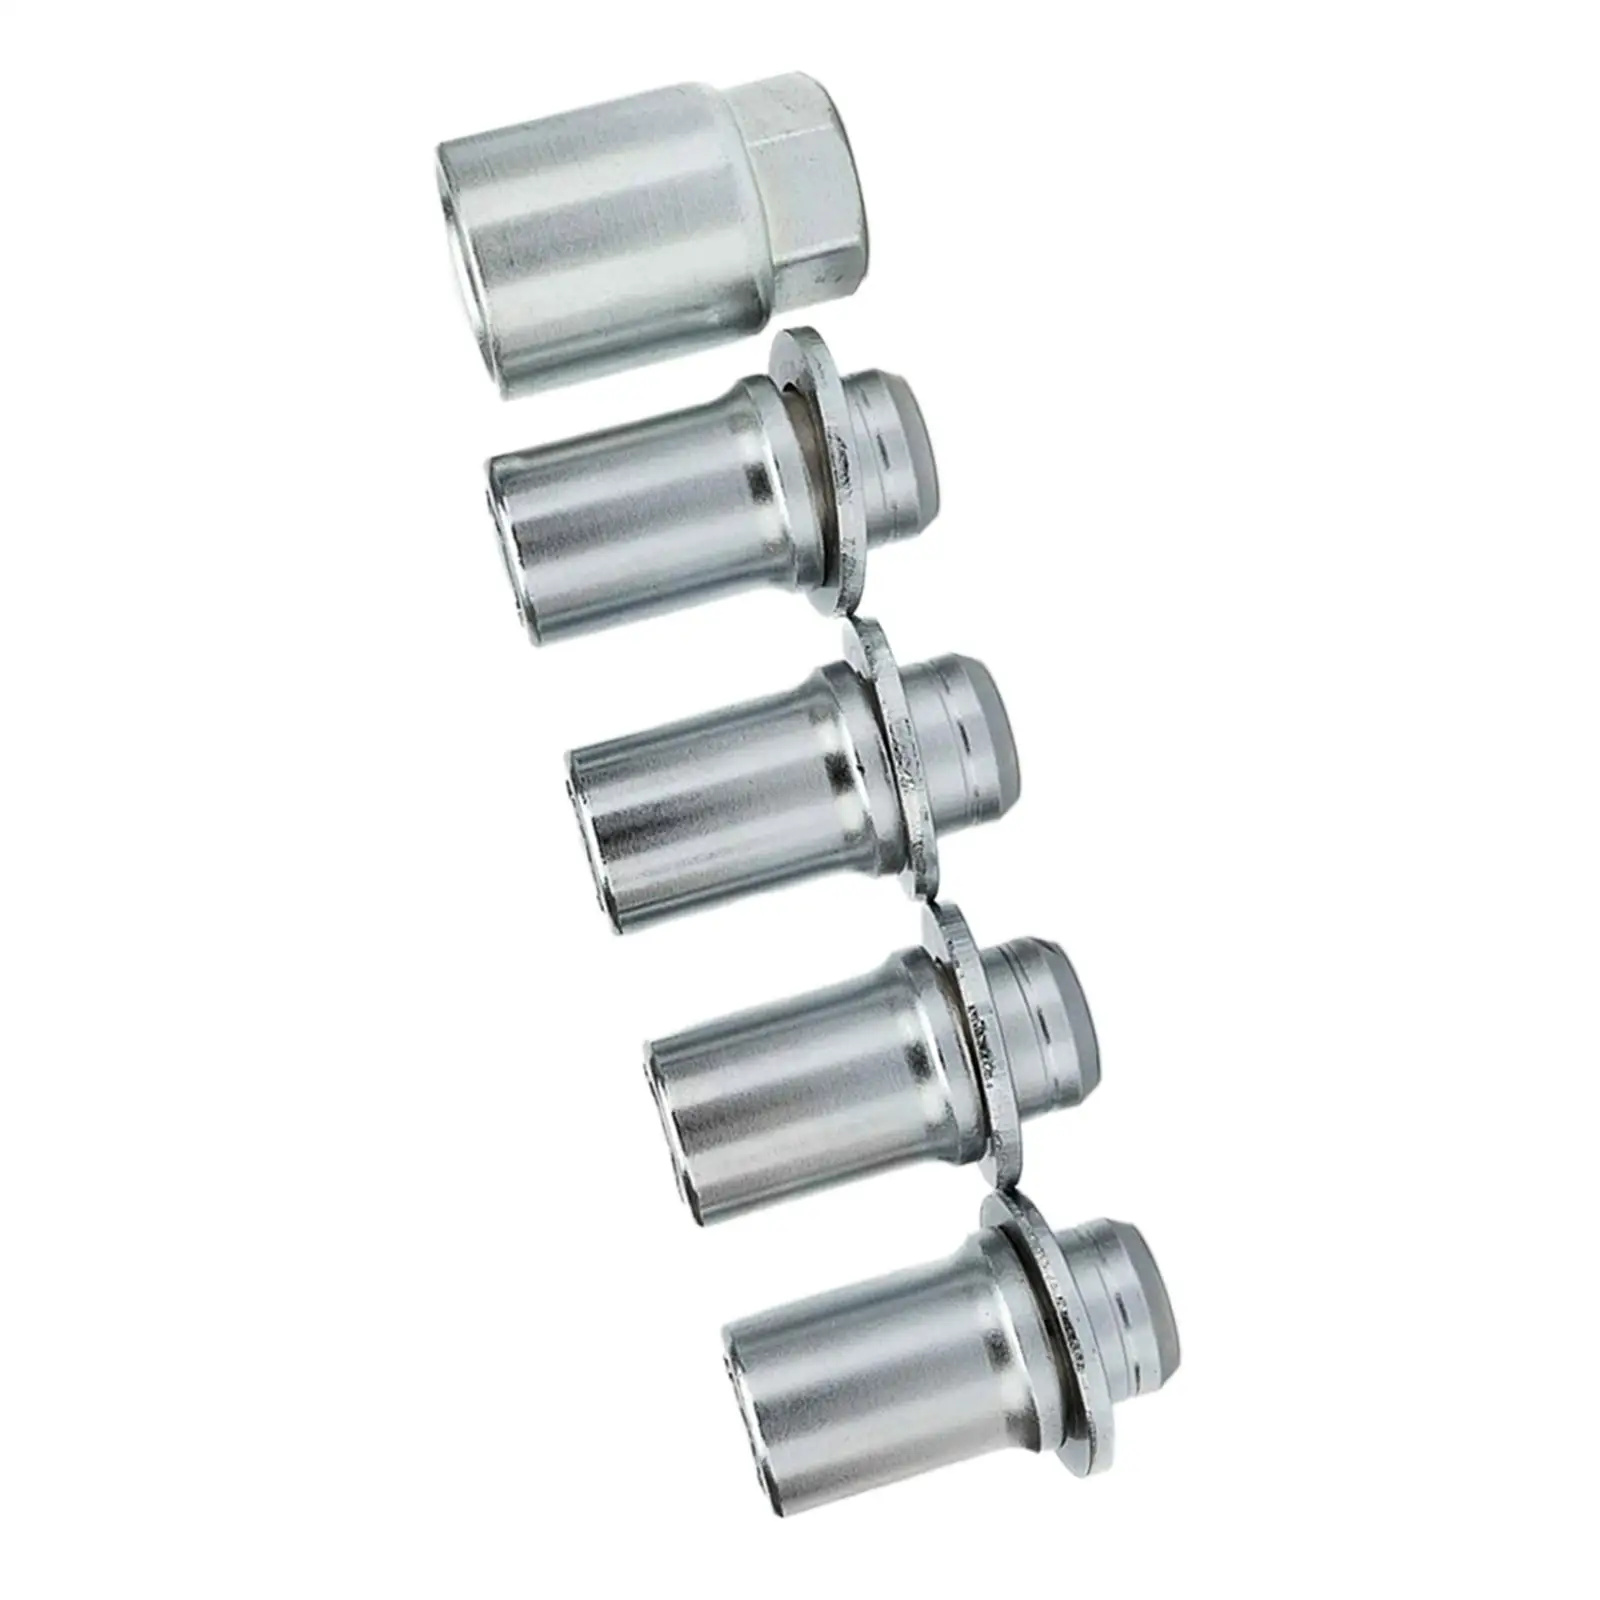 5Pcs Car Wheel Lock Lug Nut Set 0027600901 Anti Theft M12x1.5 Accessories for Solara for 4Runner Corolla GS400